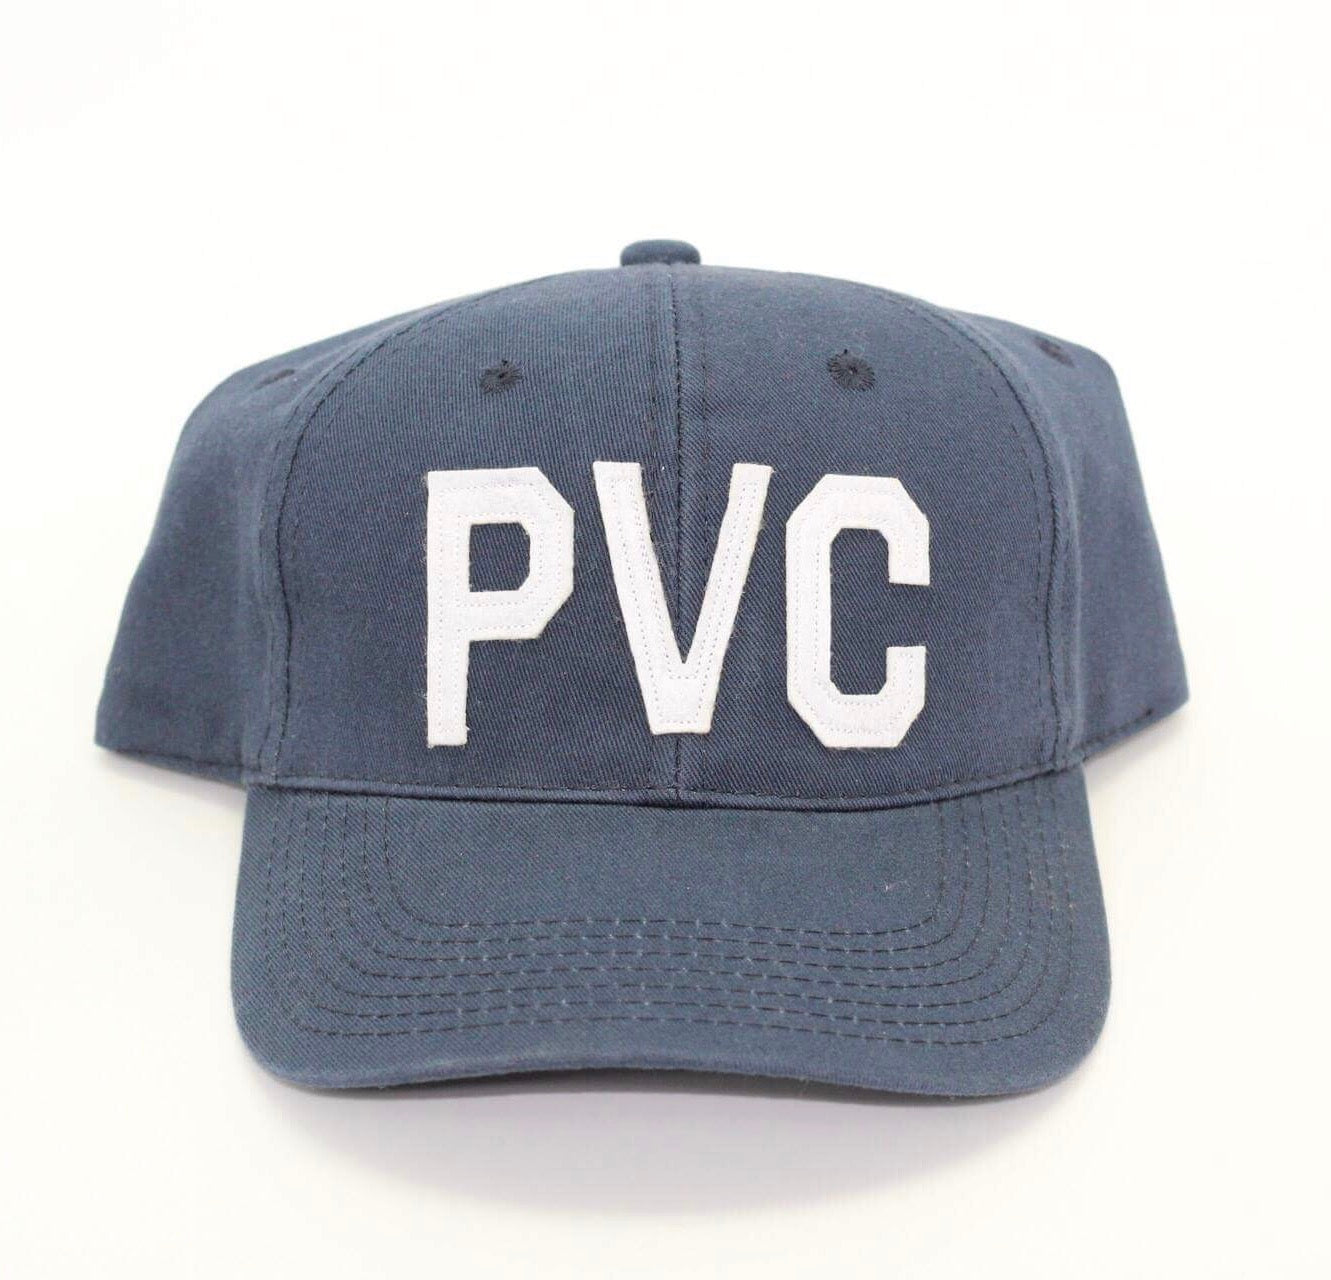 PVC - Provincetown, MA Hat